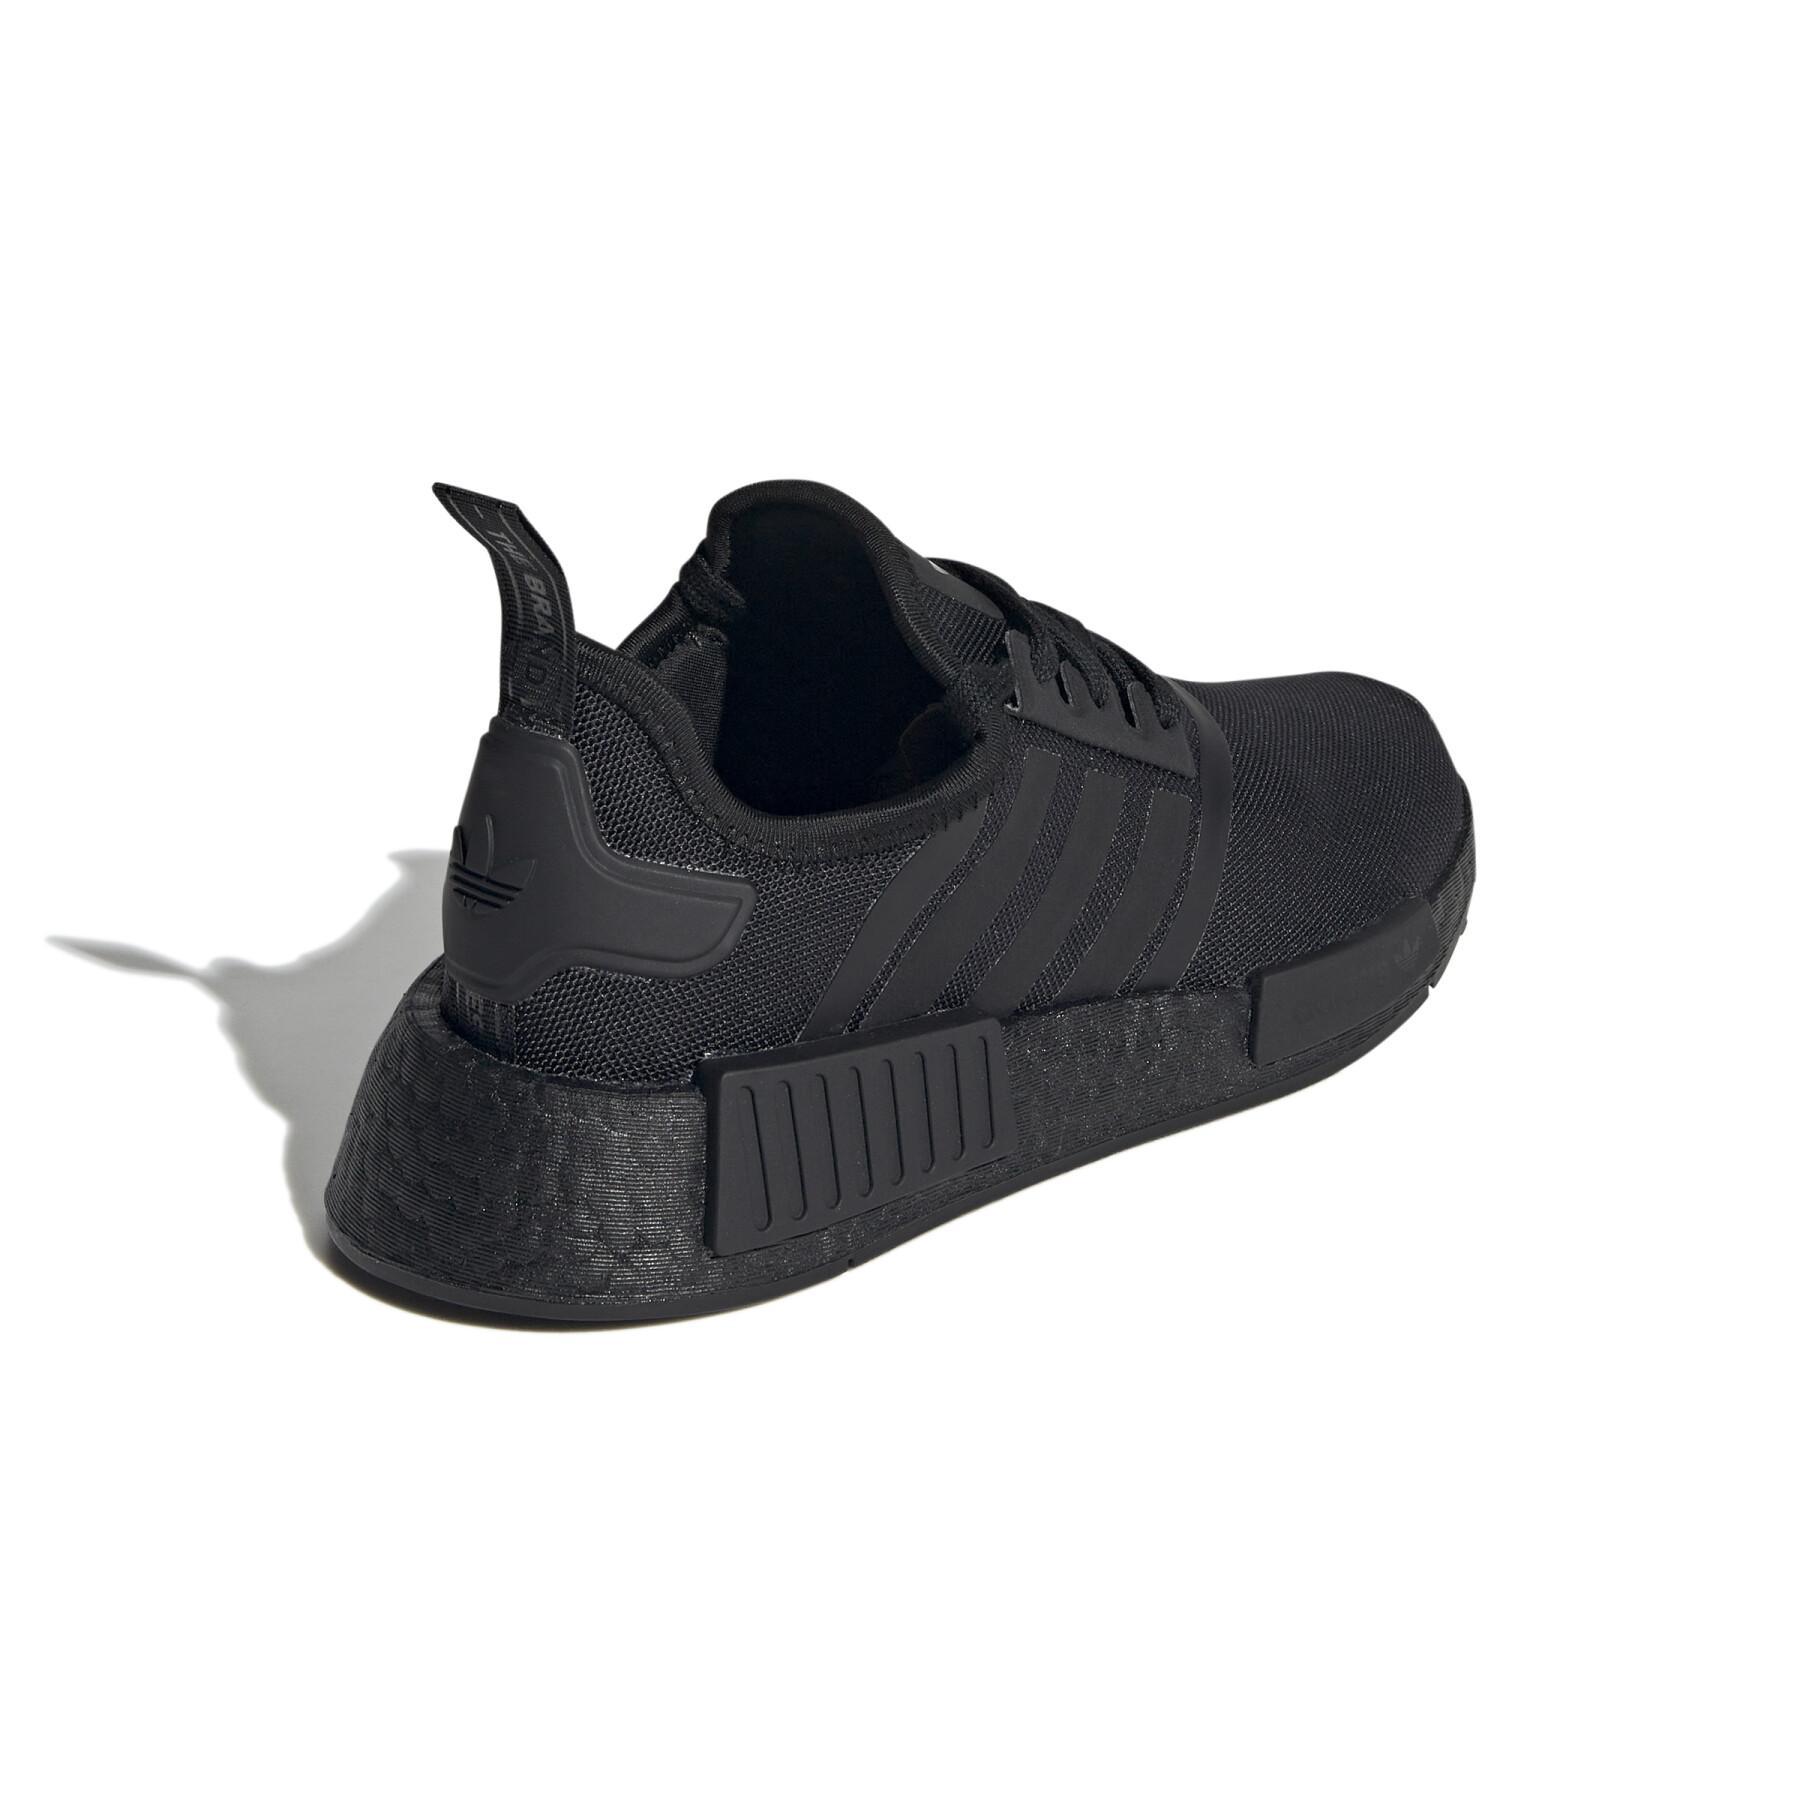 Children's sneakers adidas Originals NMD_R1